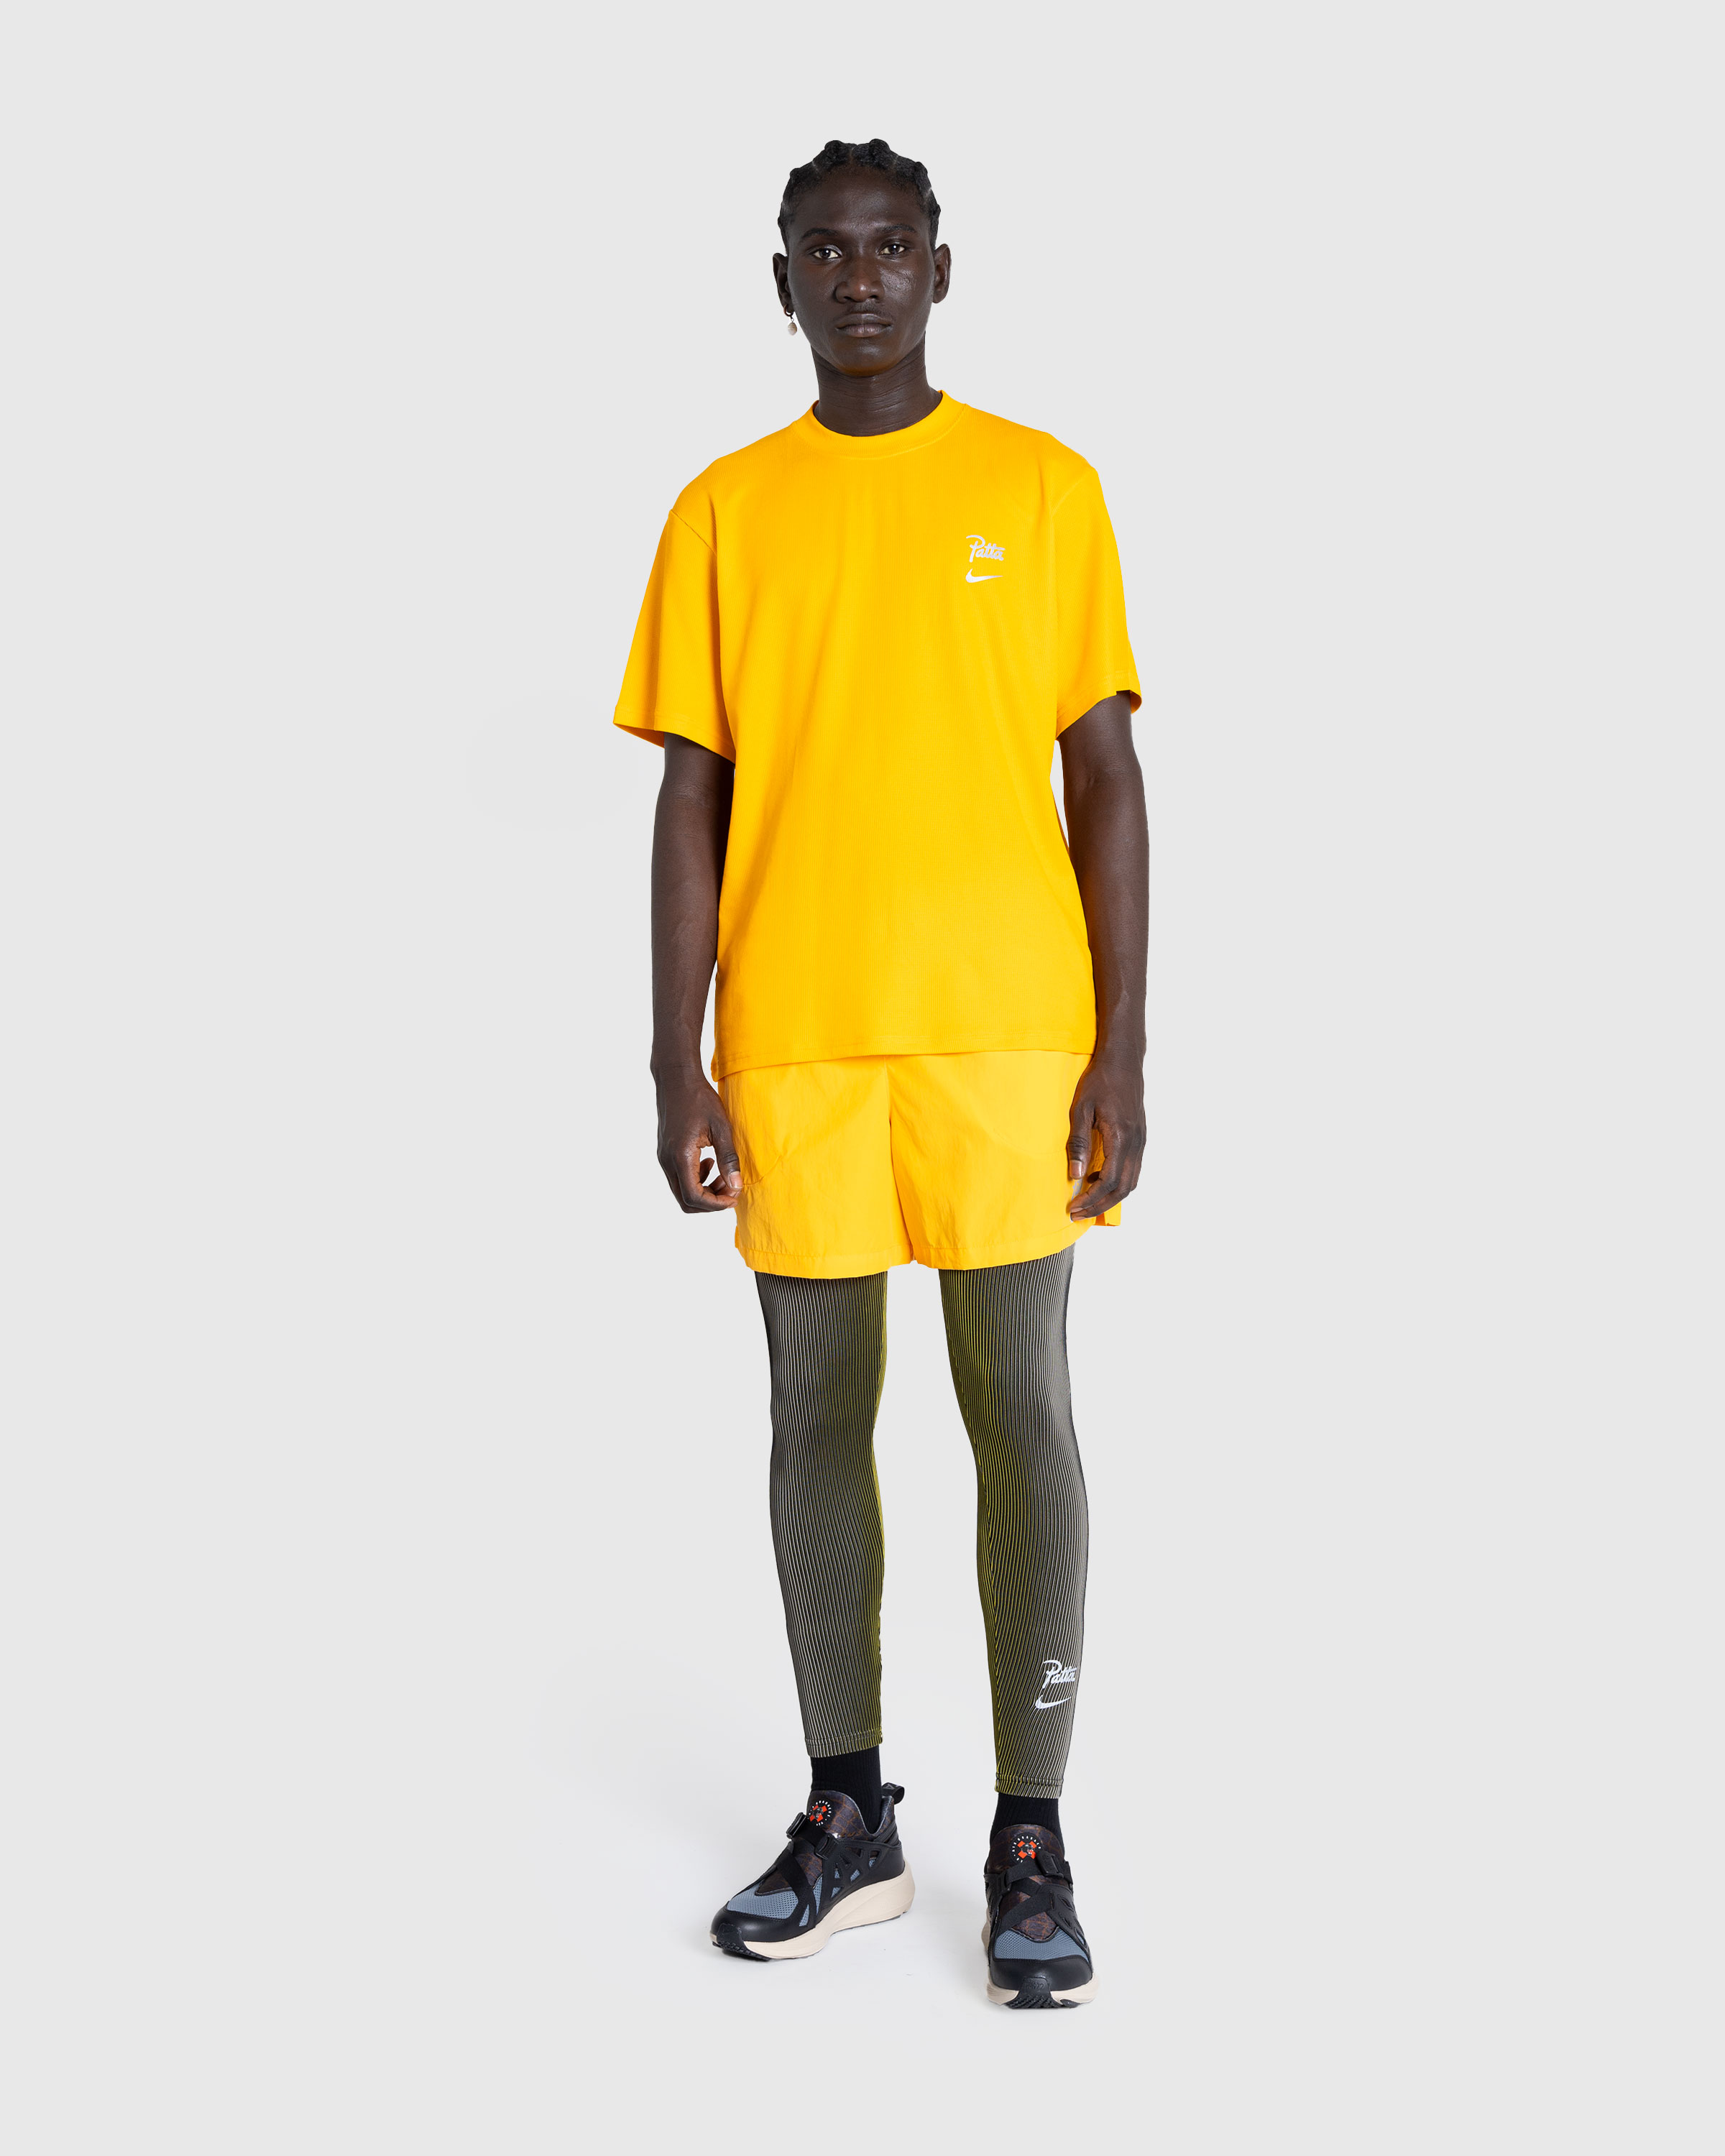 Nike x Patta – Men's Shorts Sundial - Active Shorts - Yellow - Image 3